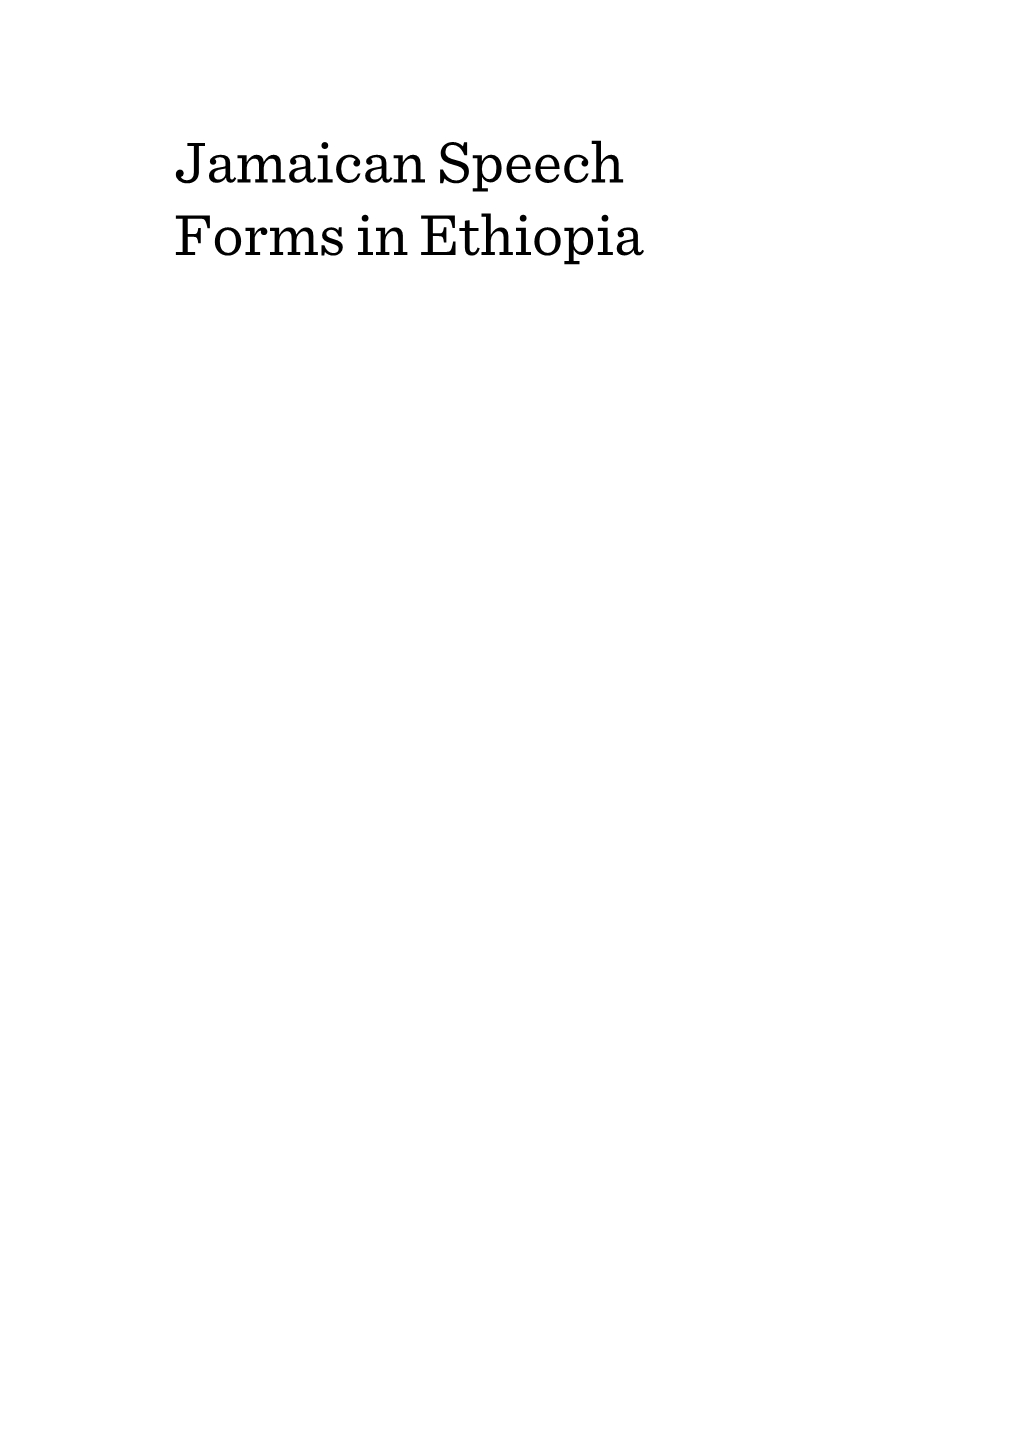 Jamaican Speech Forms in Ethiopia